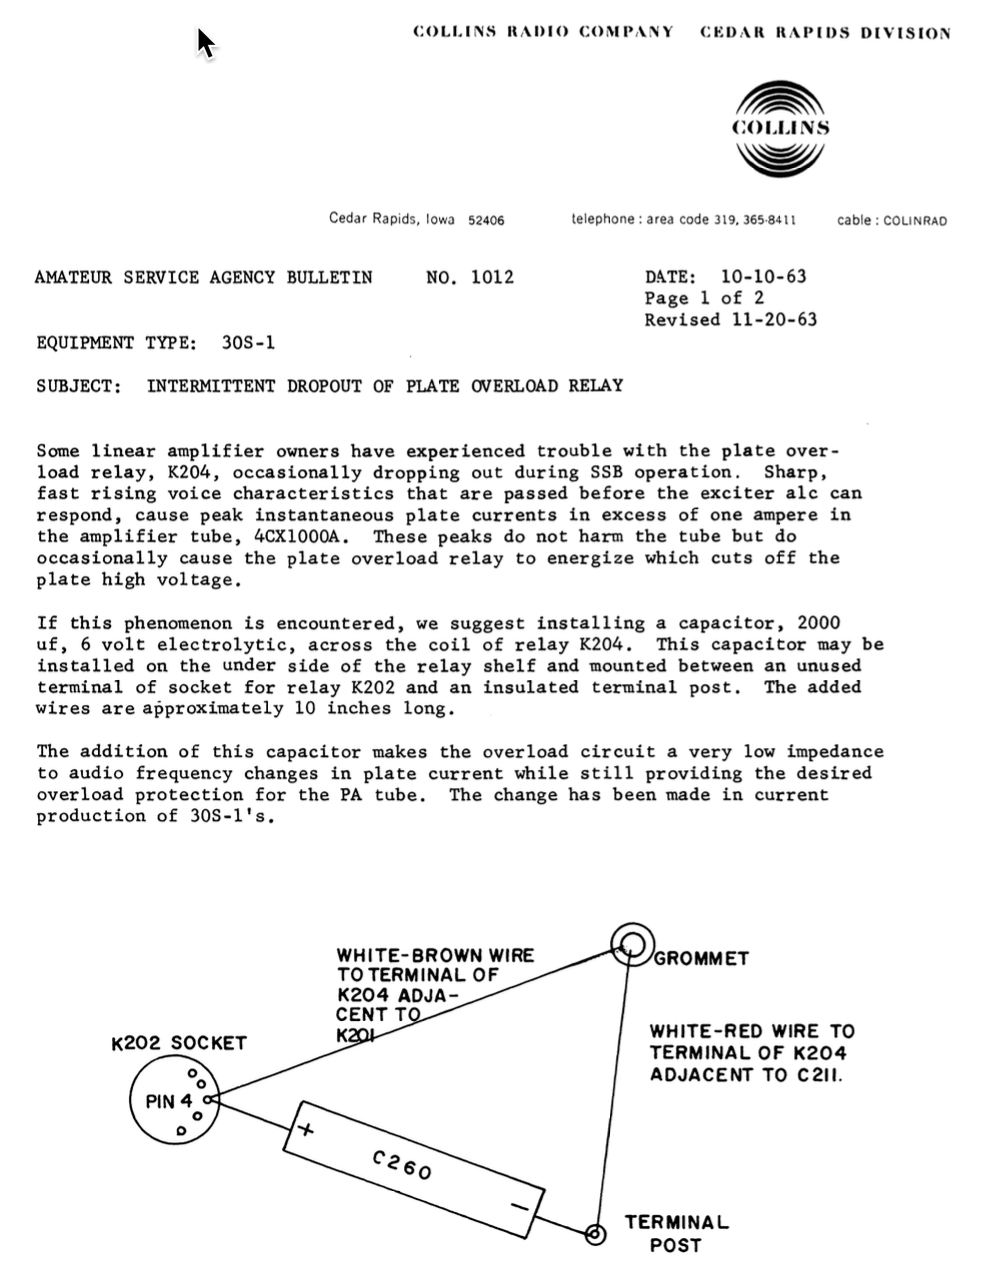 Collins Amateur Service Agency Bulletin Number 1012 (1963-11)